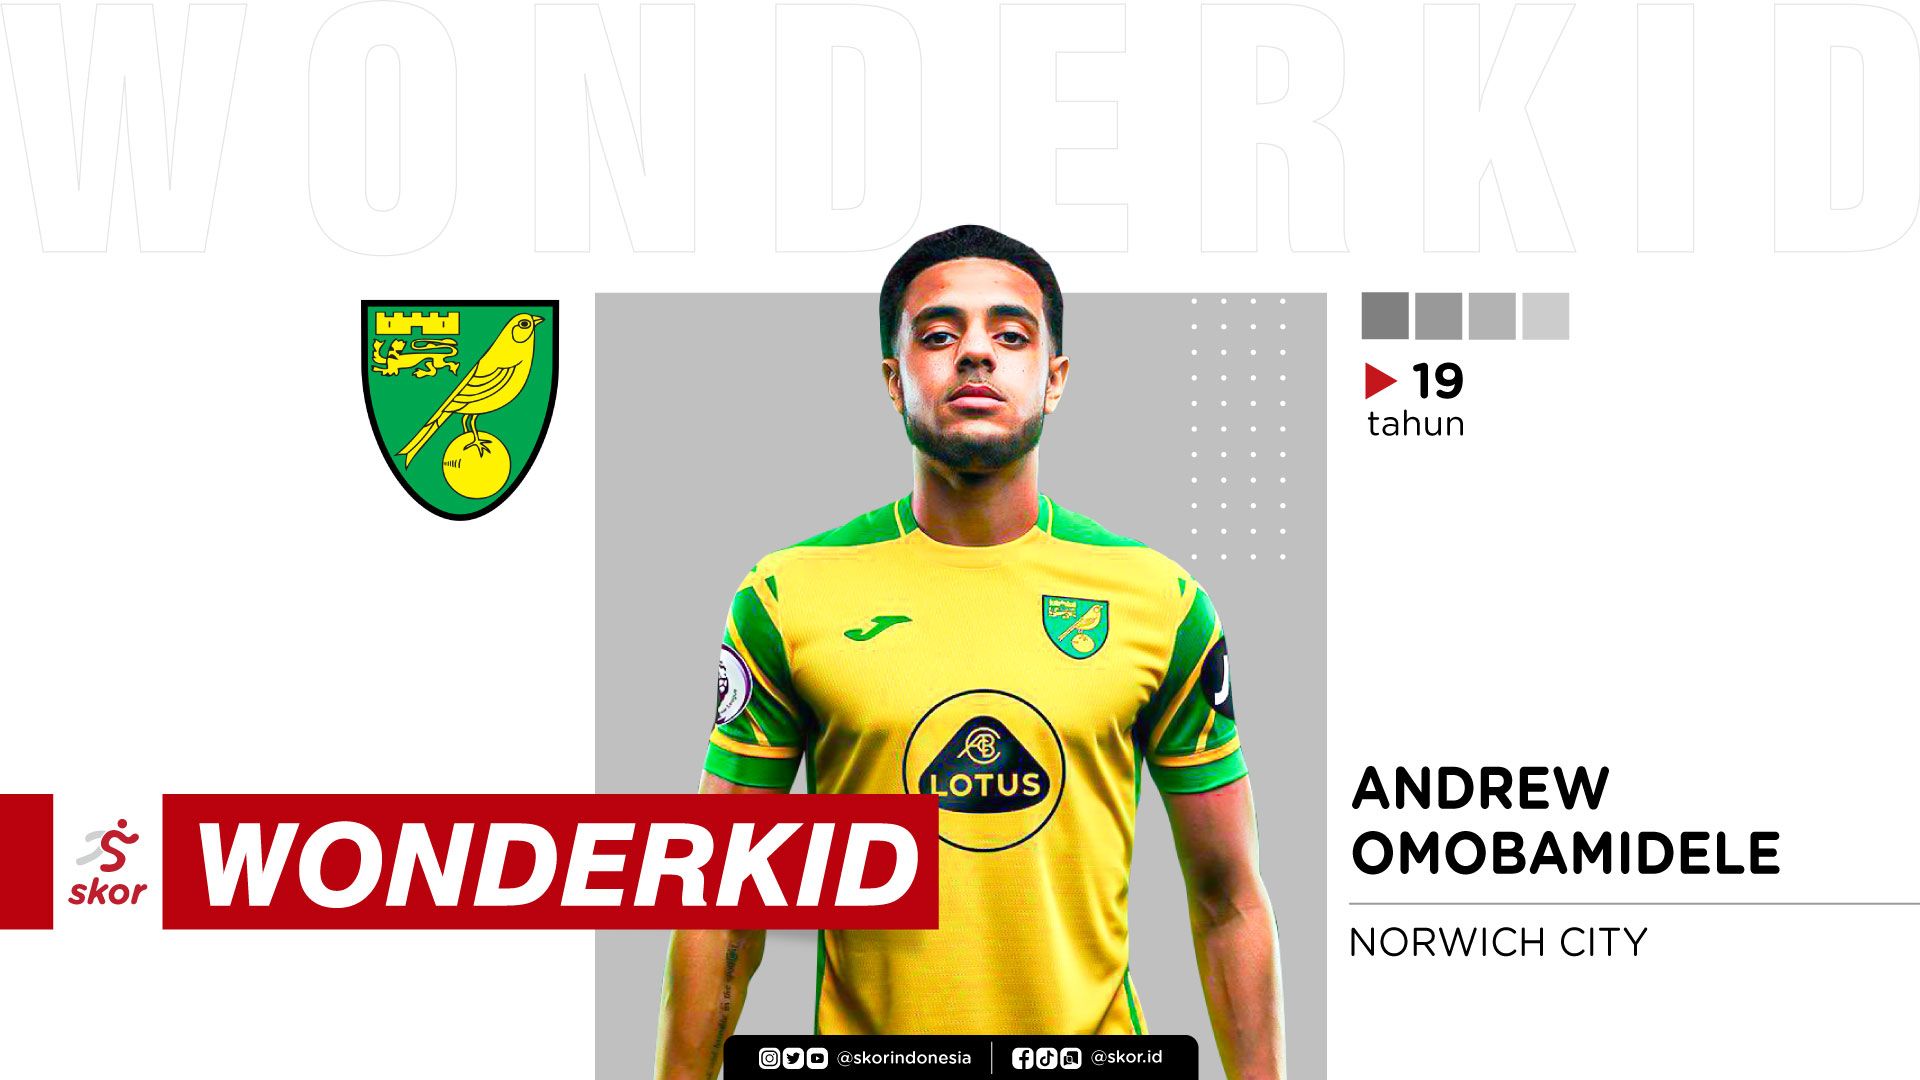 Wonderkid - Andrew Omobamidele, 19 Tahun (Norwich City)